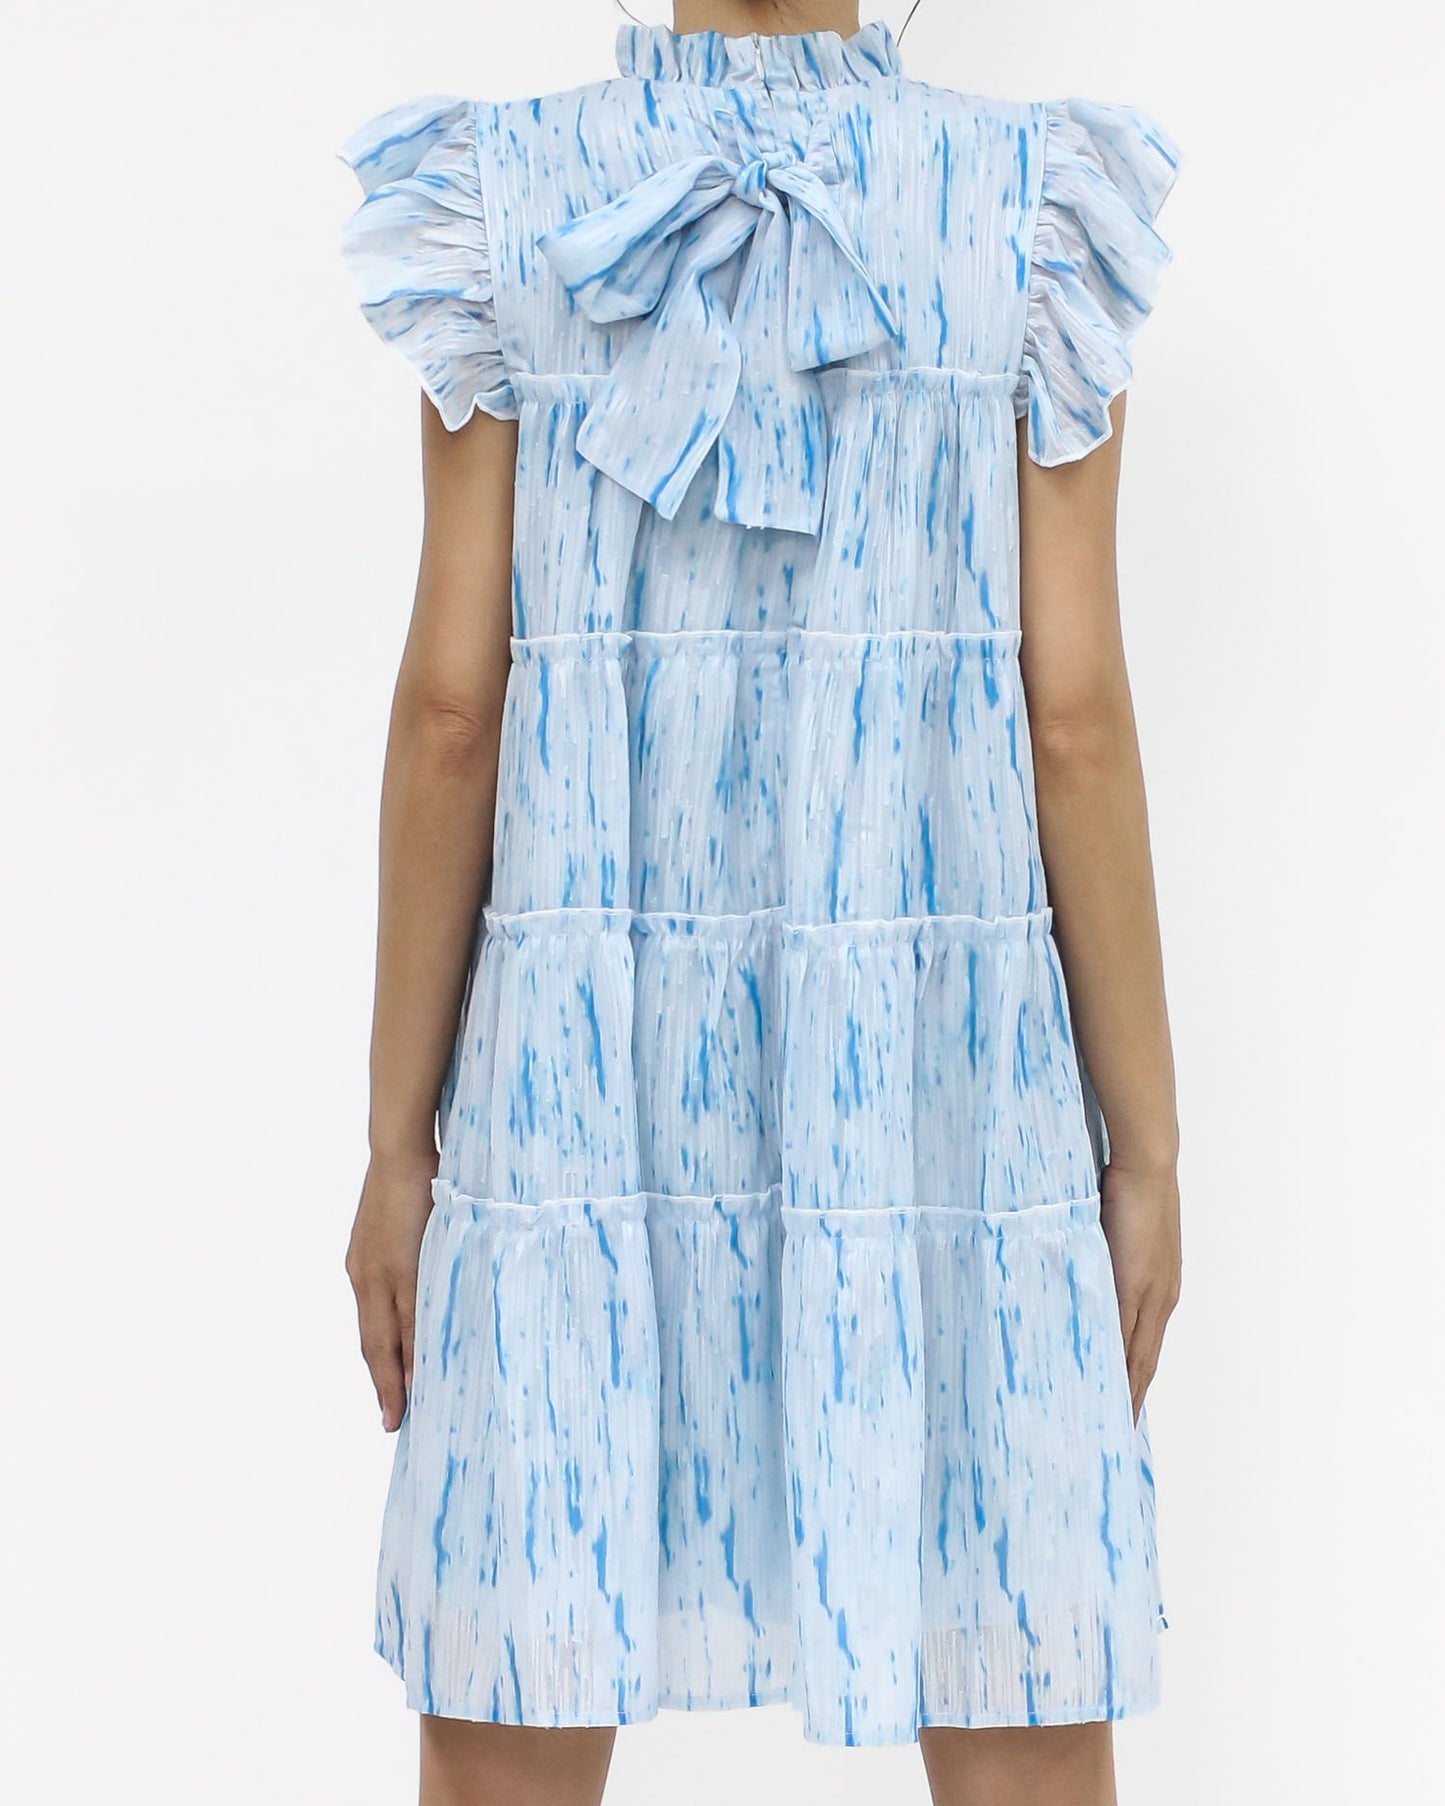 blue printed chiffon texture dress *pre-order*